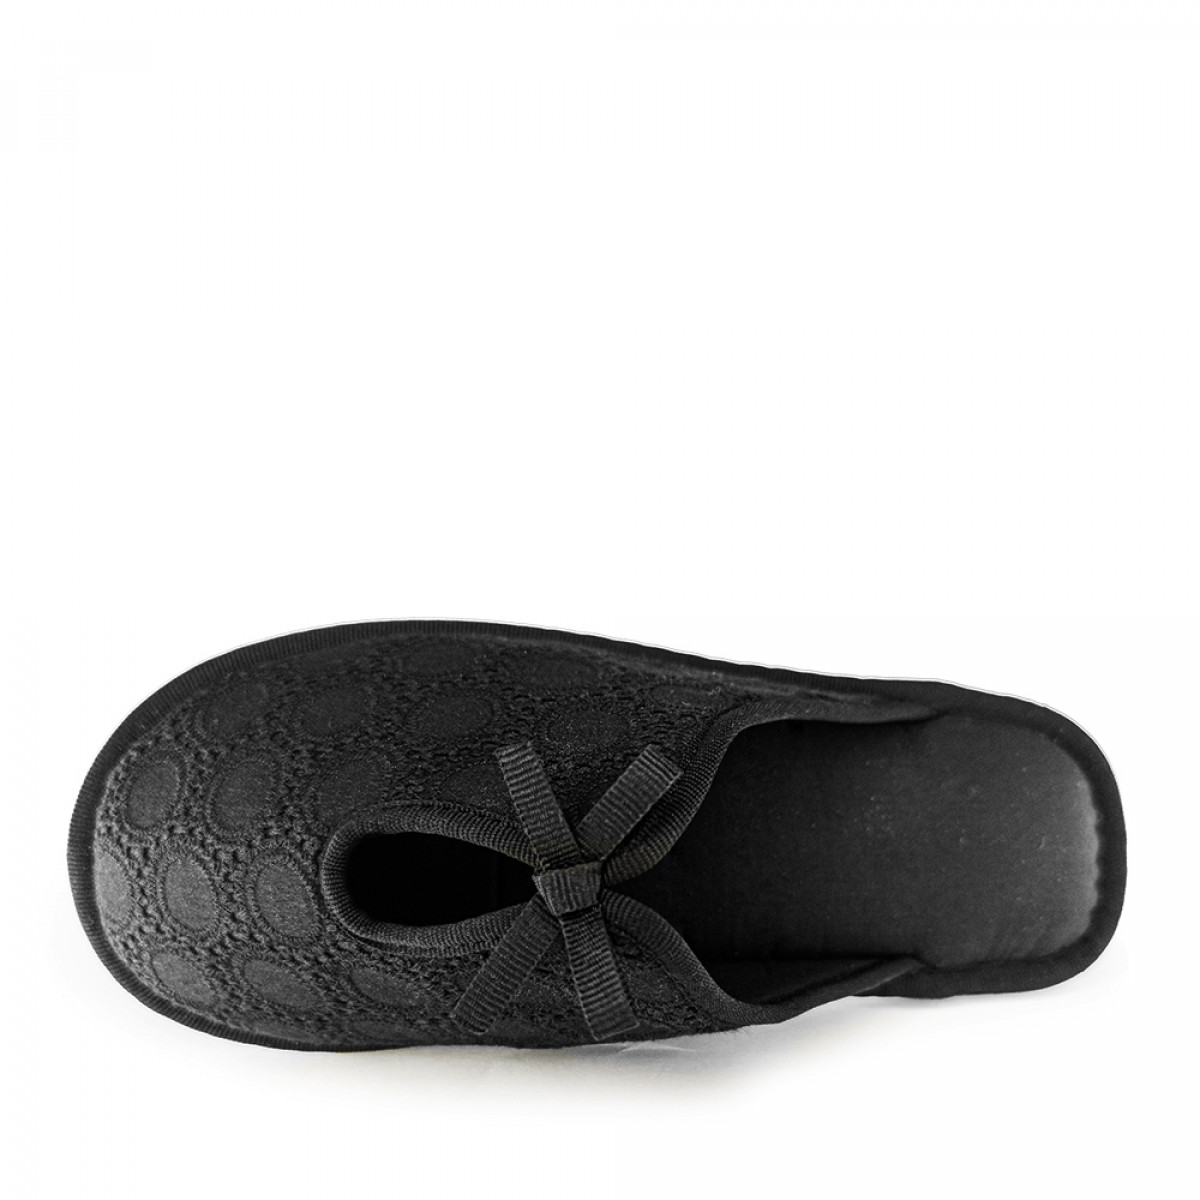 Home slippers BELLA, Black